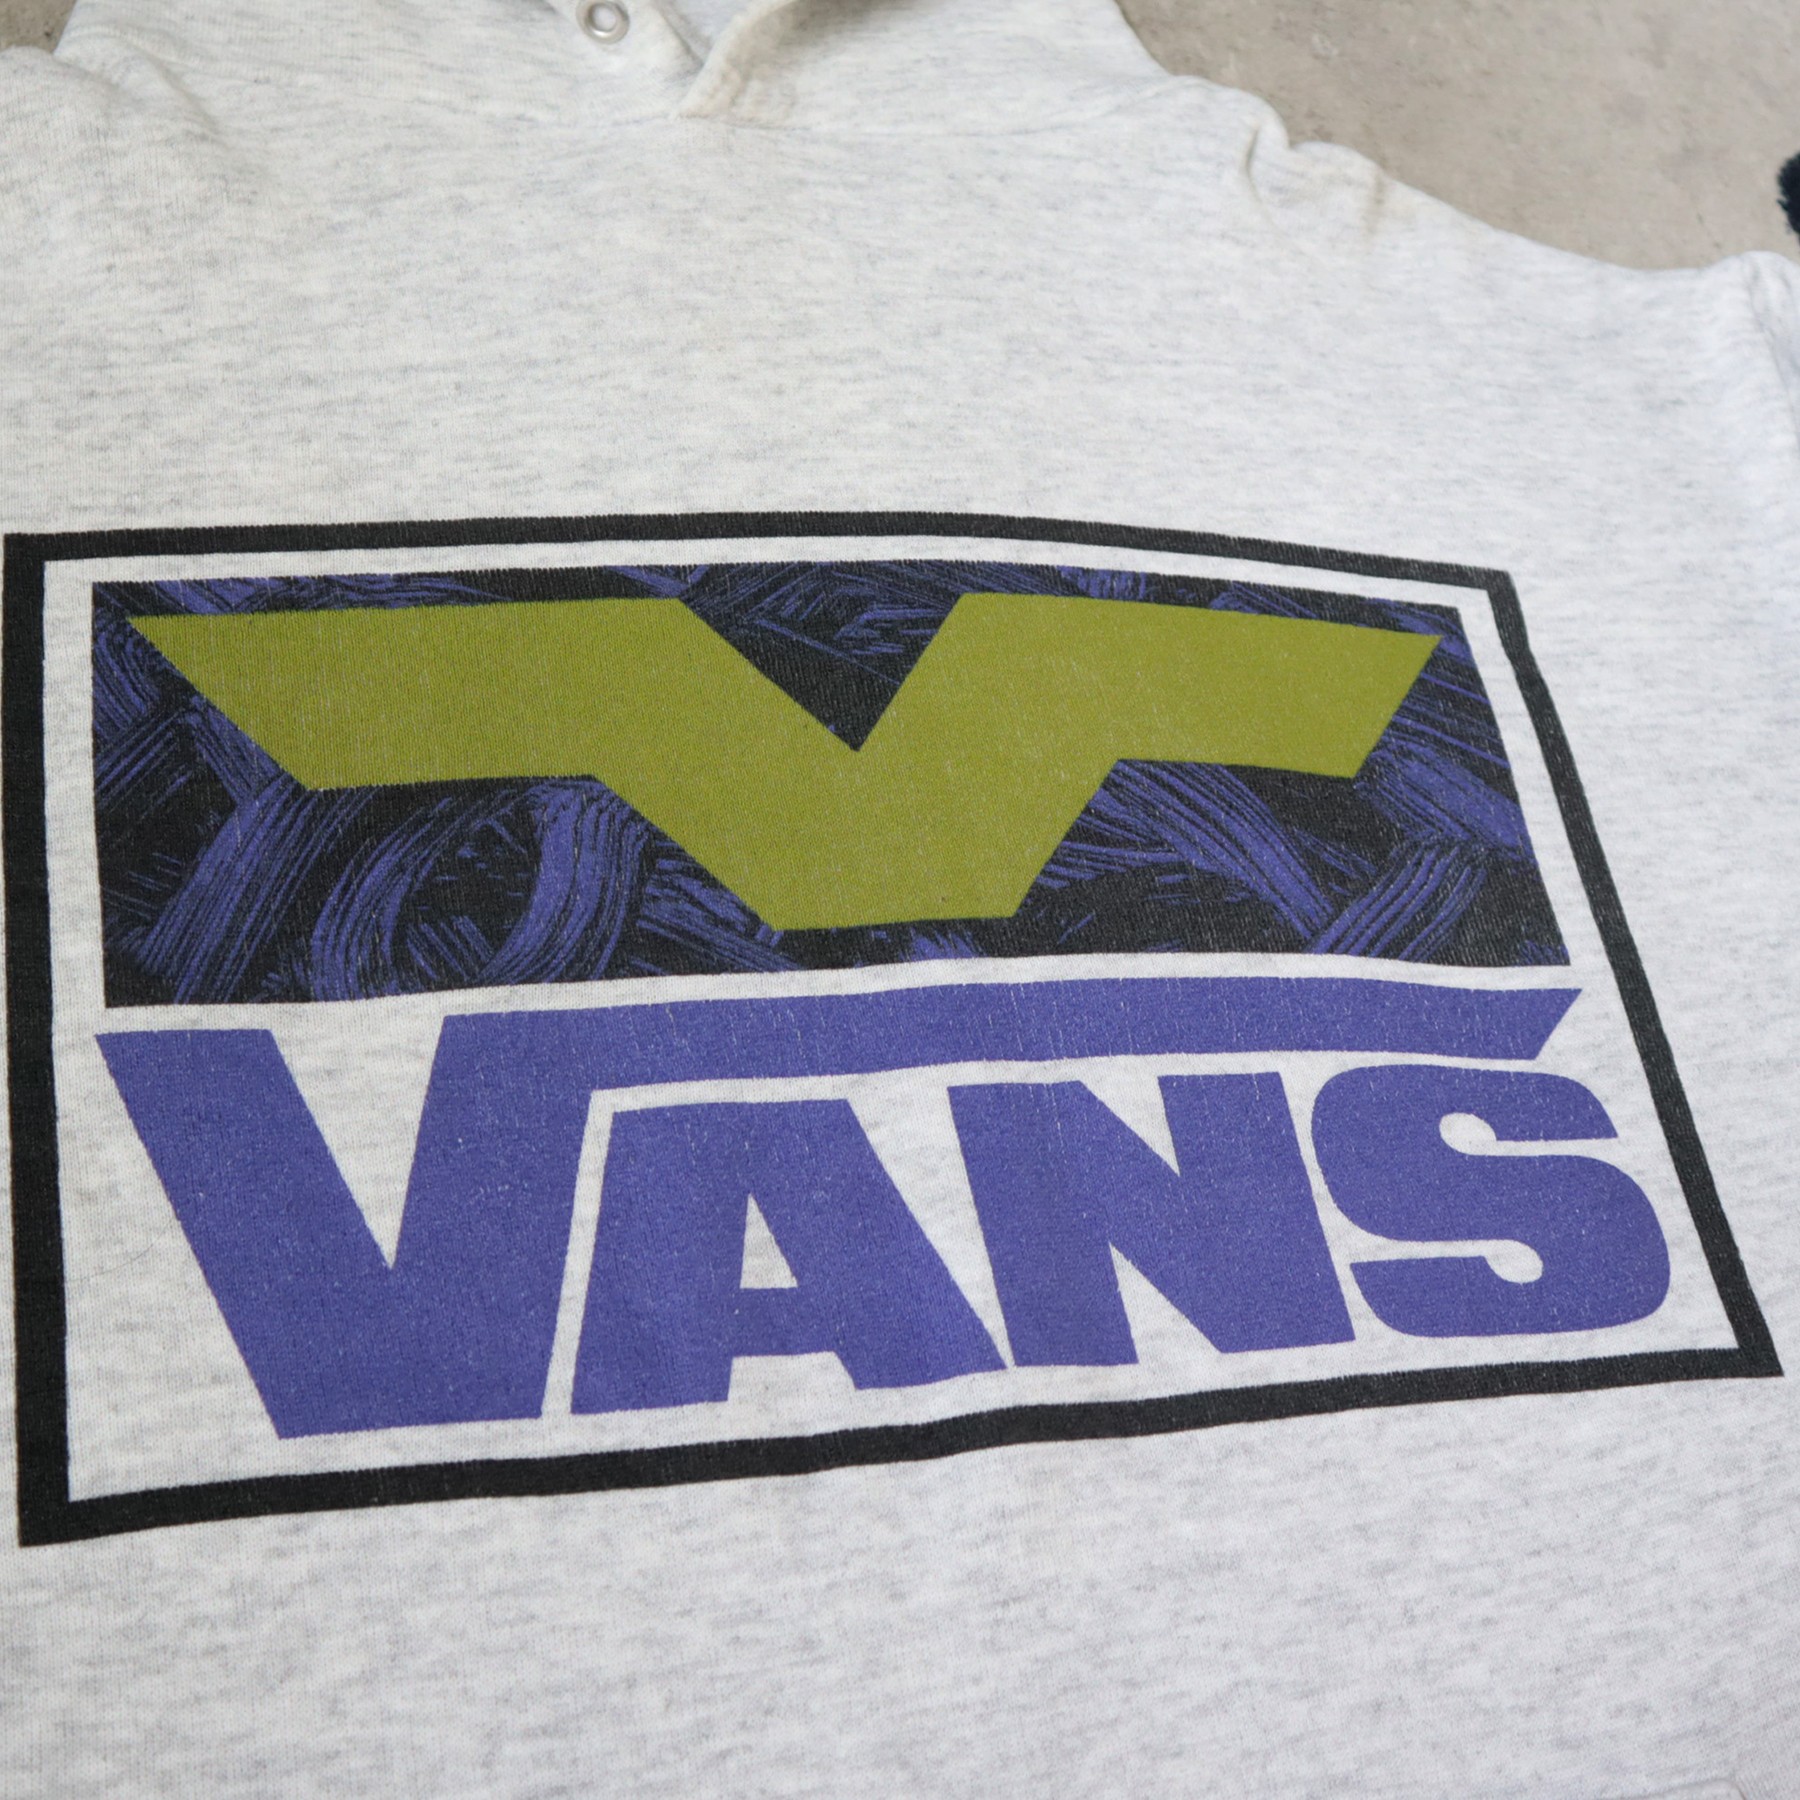 Vintage 80s 90s VANS Big Logo Sweater Sweatshirt Hoodie Pullover Jumper Made In U.S.A Size L - 2